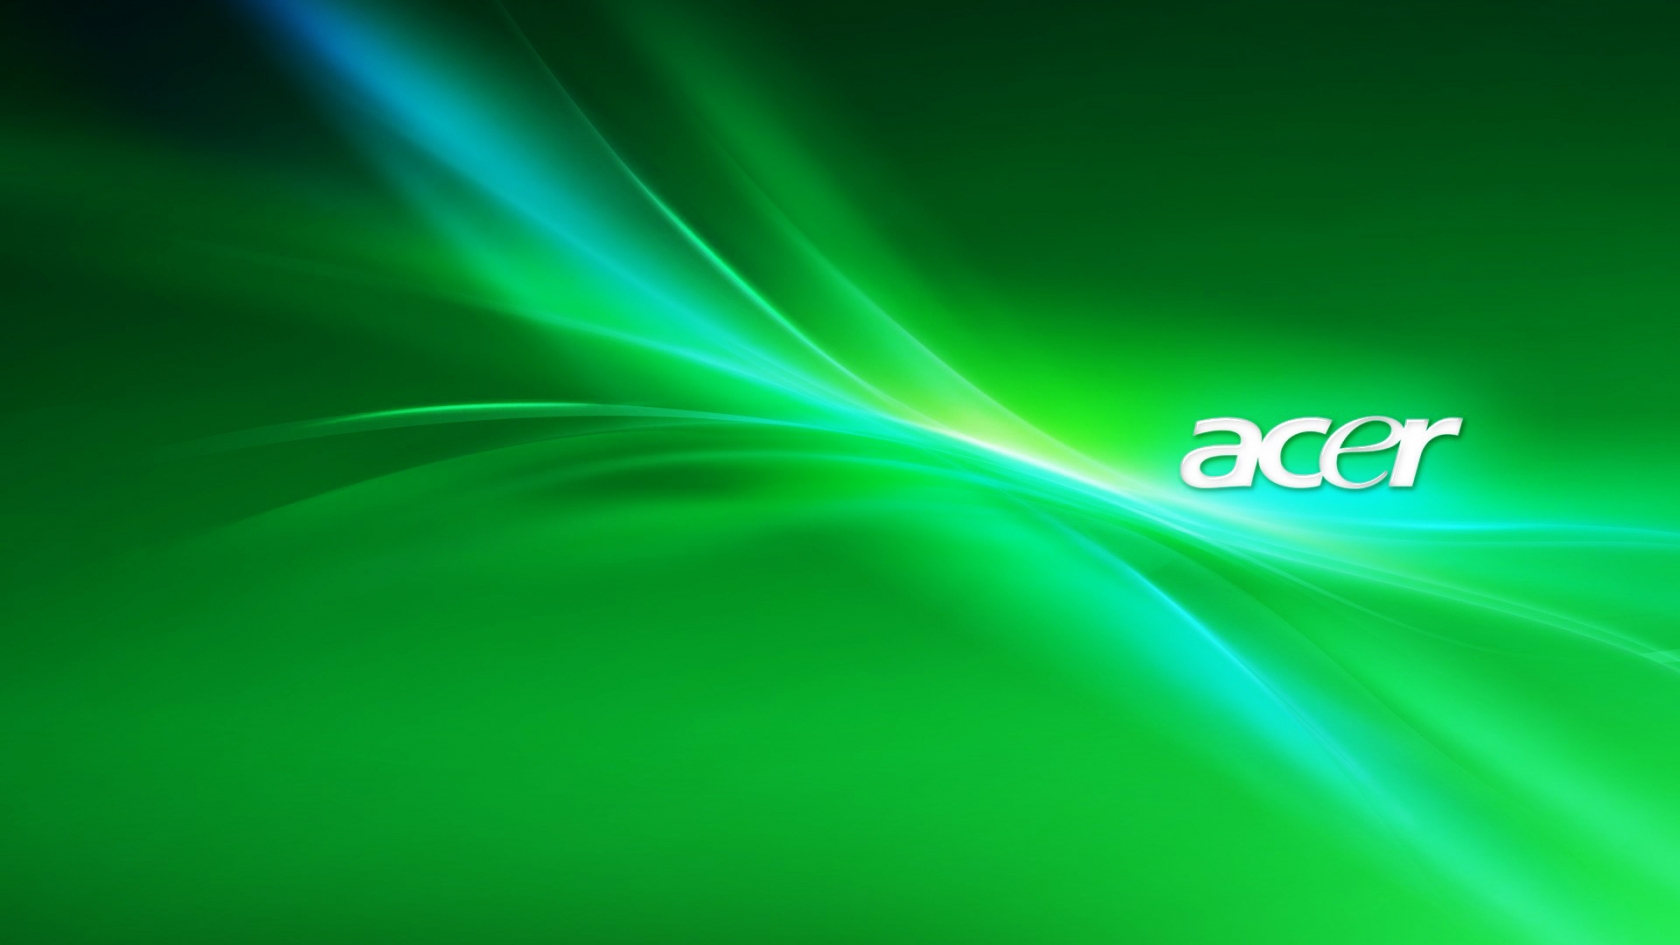 Acer Green for 1680 x 945 HDTV resolution